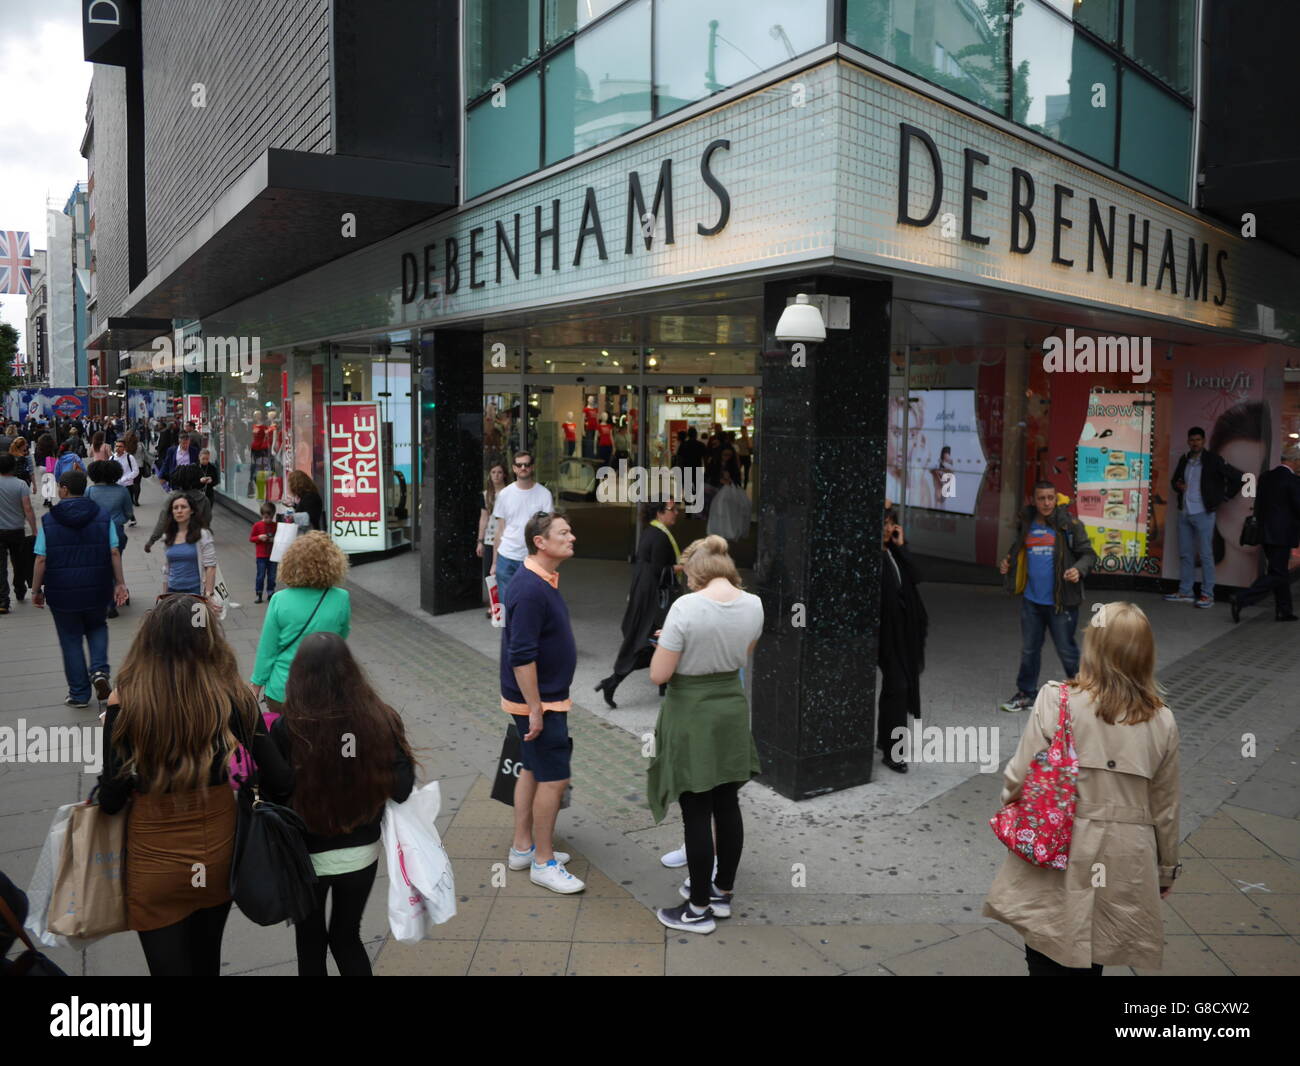 Debenhams Retail shop Oxford Street London Stock Photo